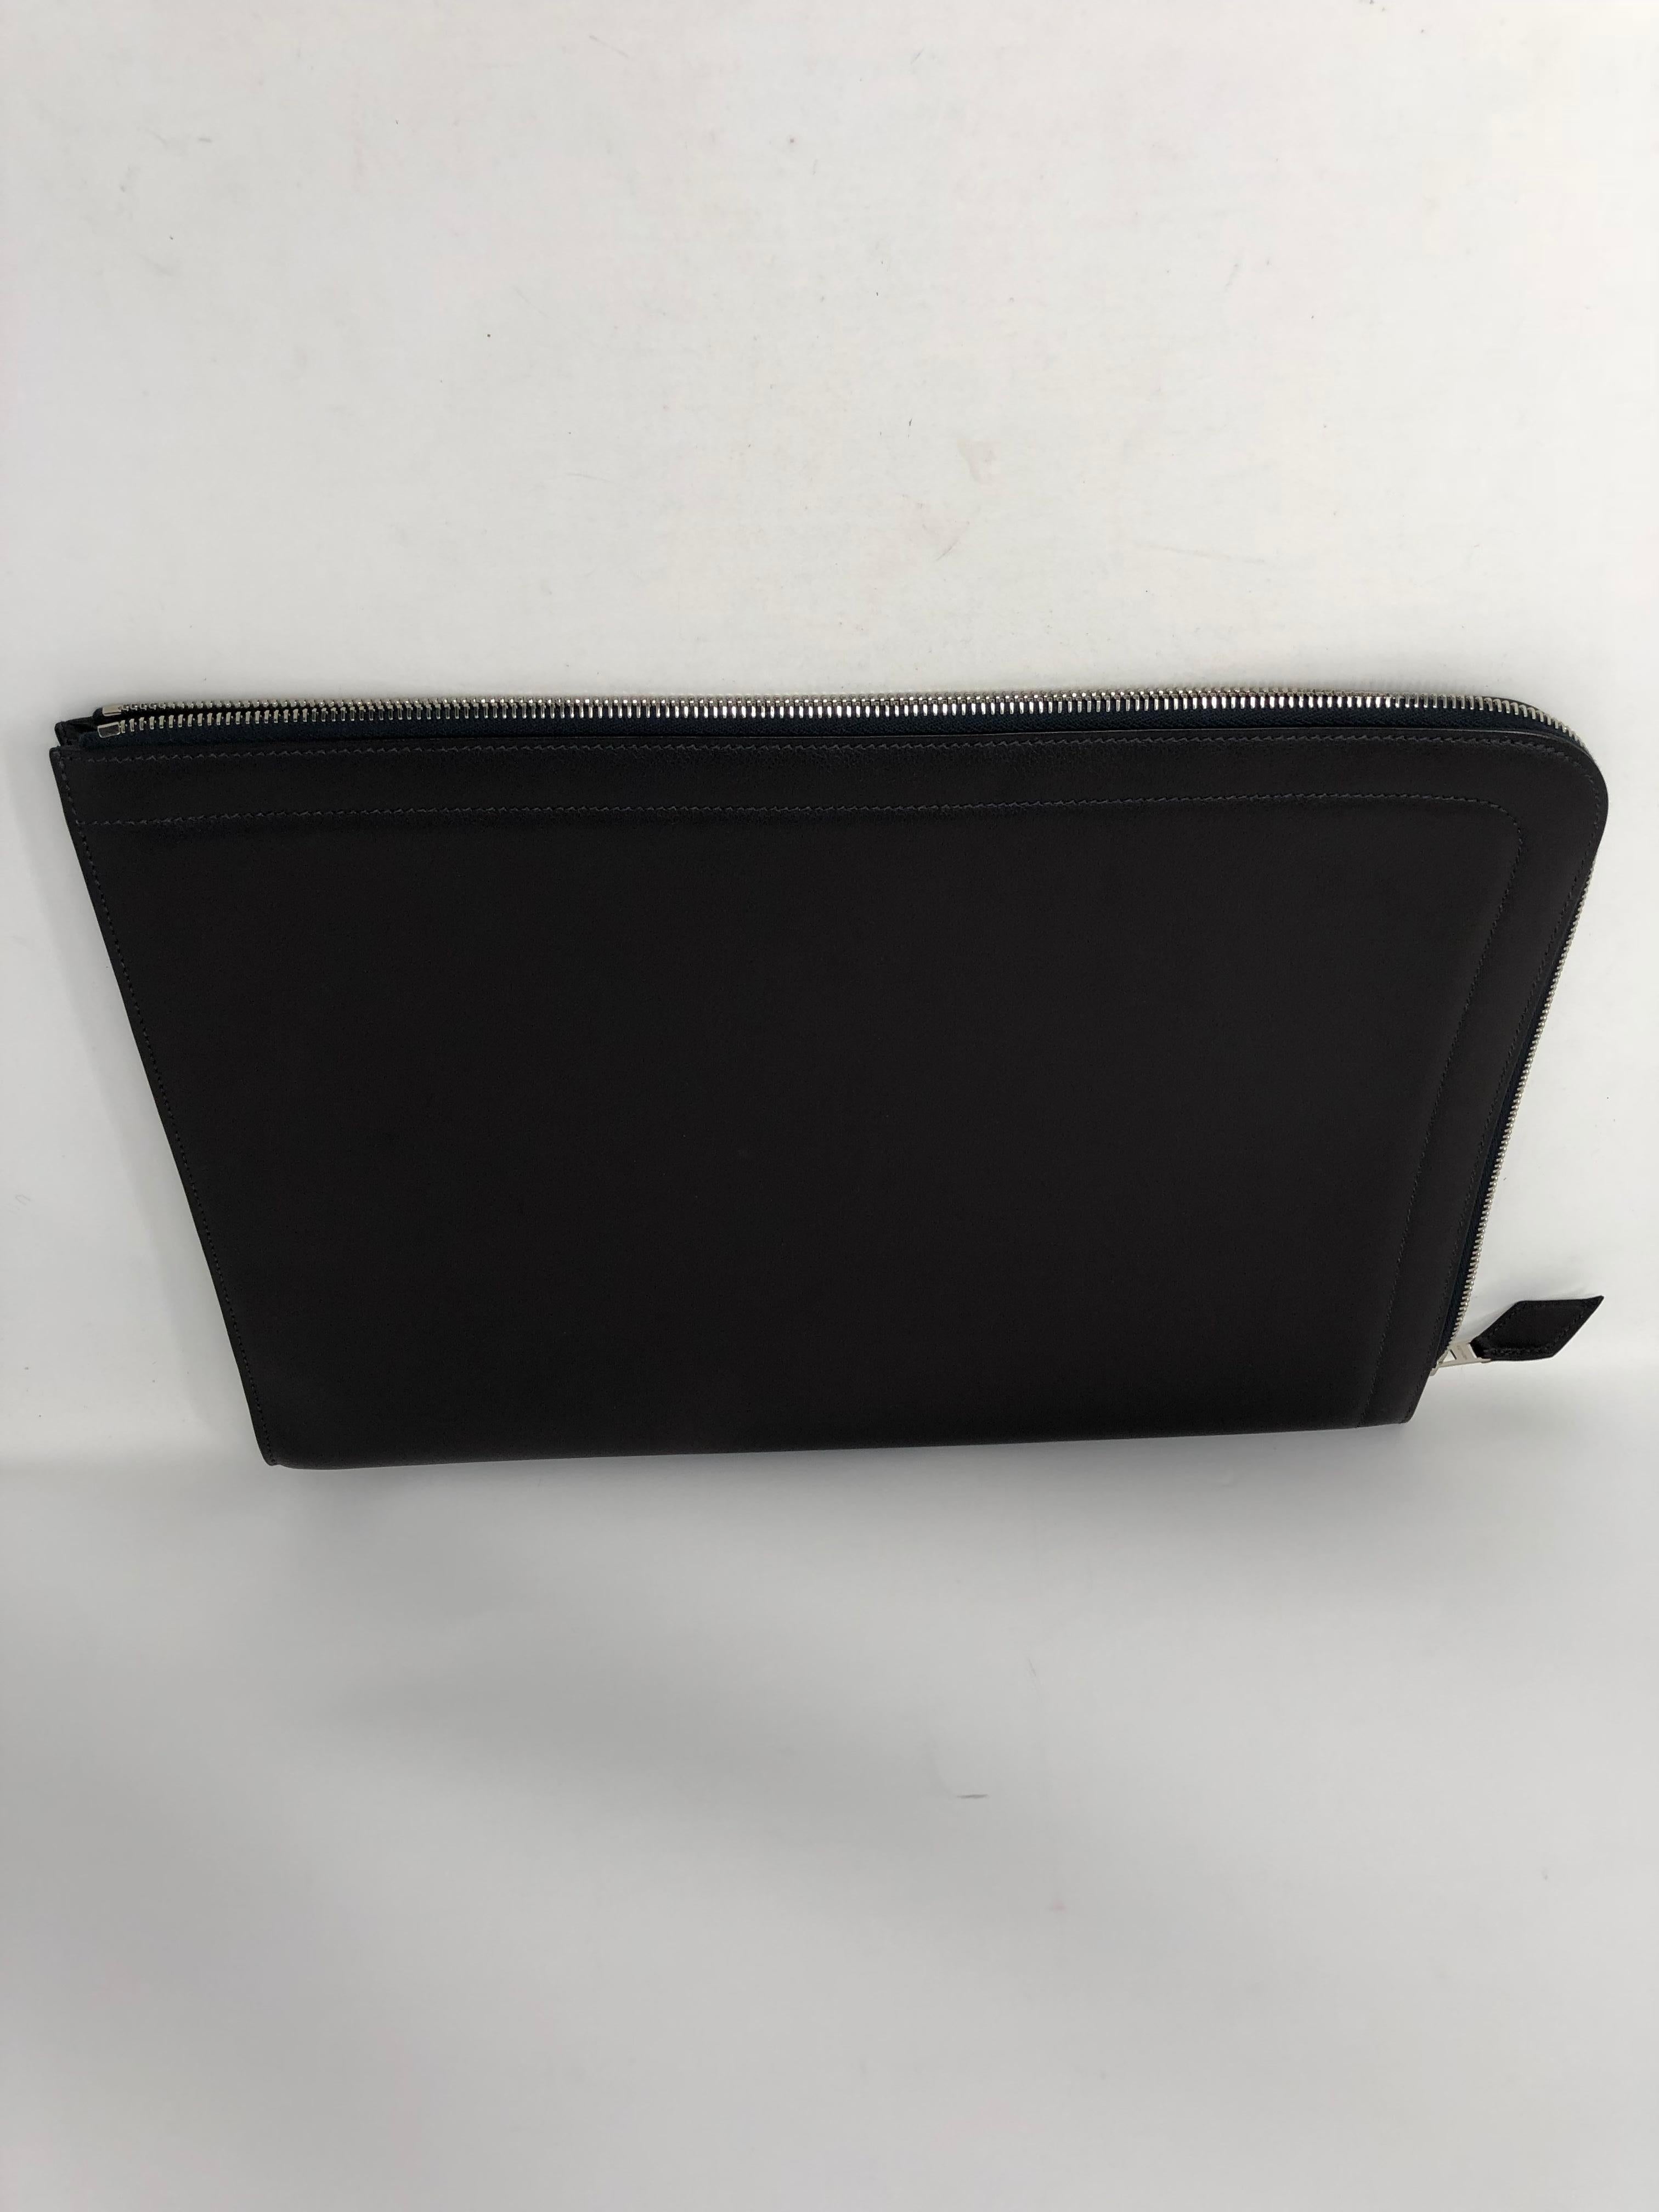 Hermes Bleu Indigo Zip Computer Laptop Sleeve Case 5